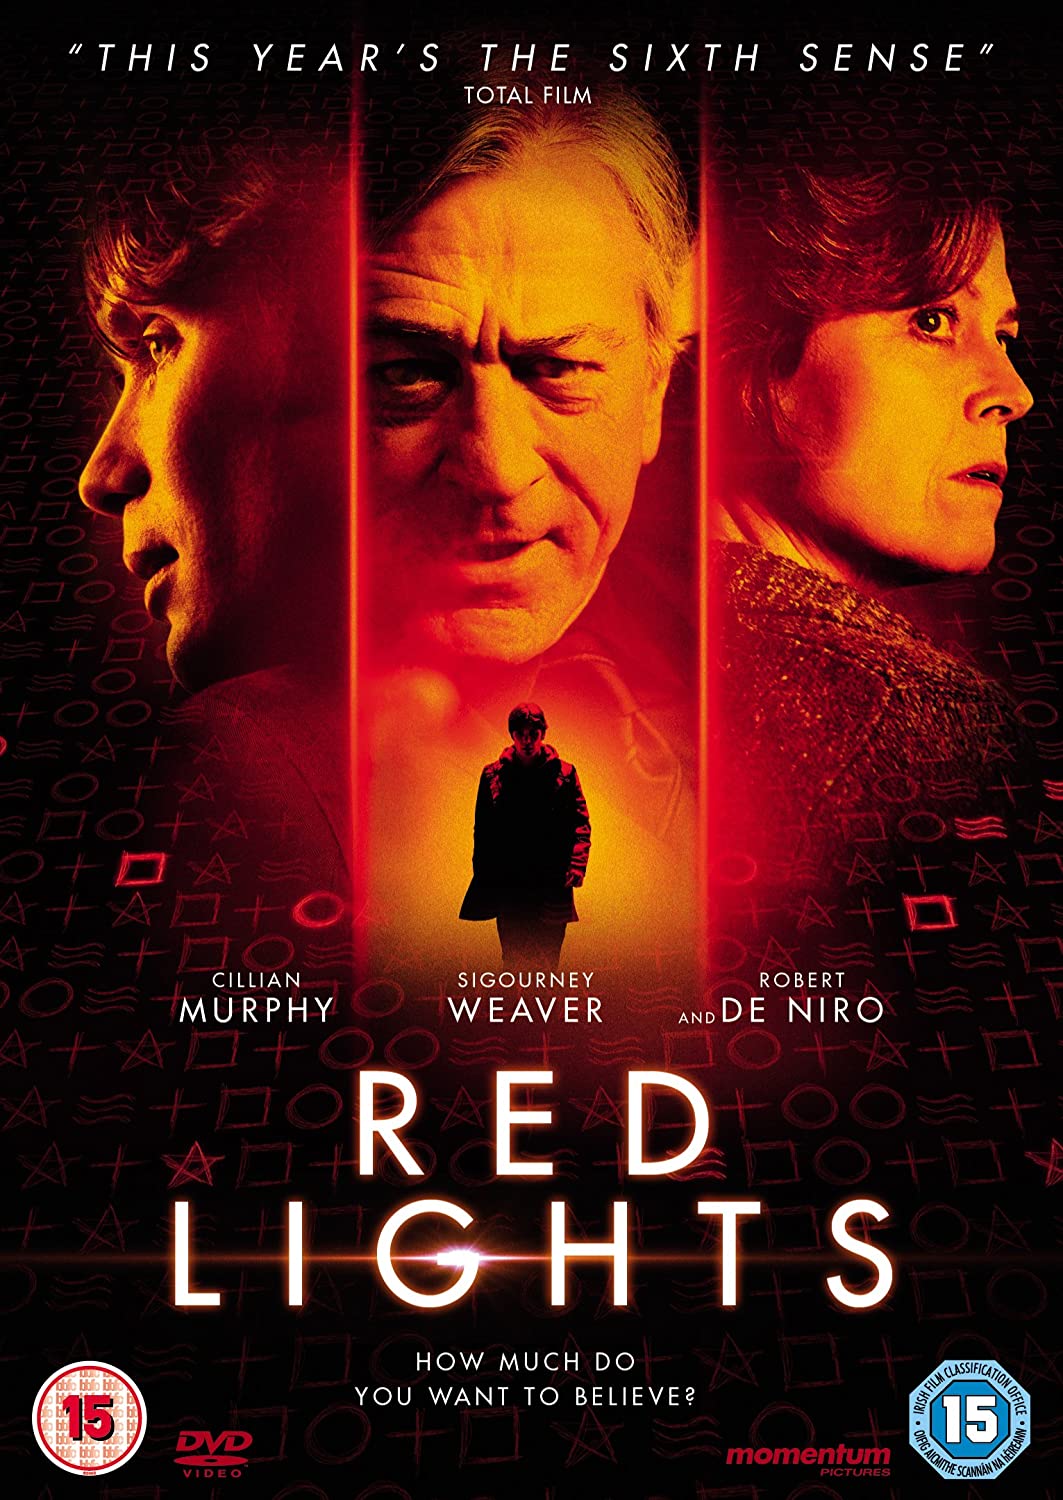 Red Lights (2012) - Thriller/Mystery [DVD]